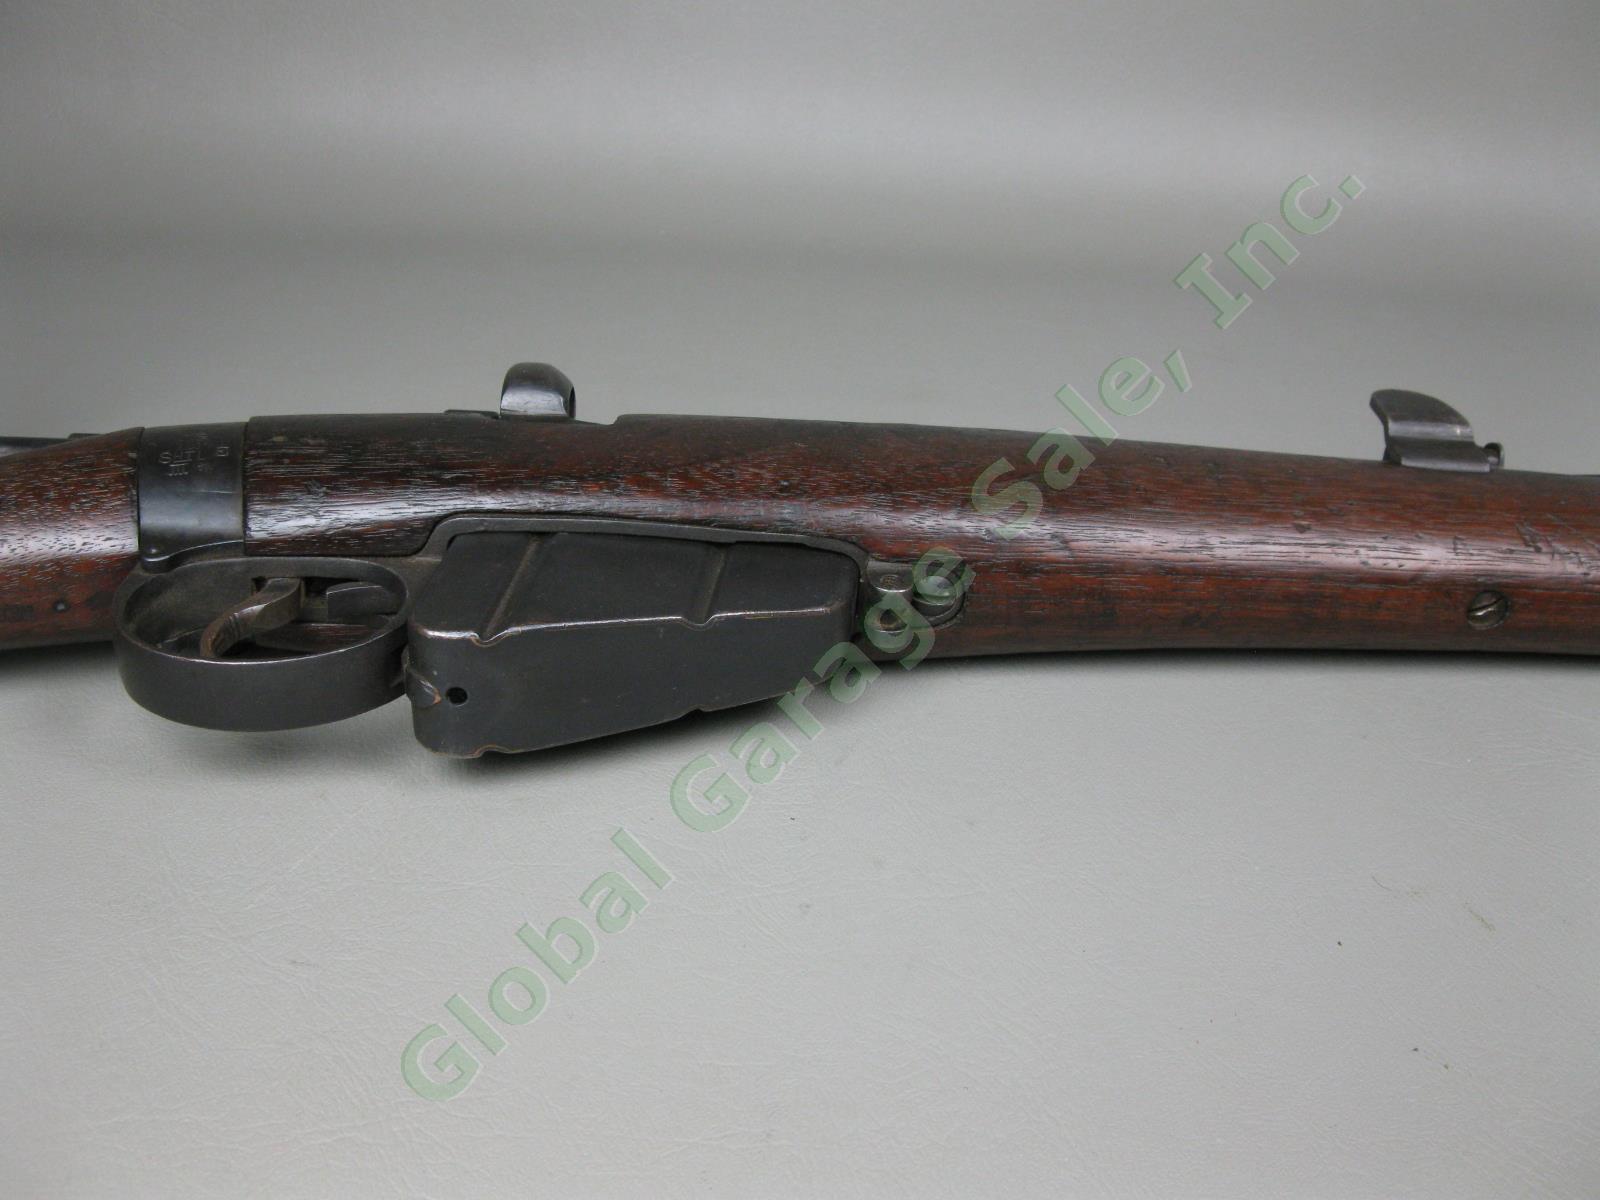 Rare WWI Lee-Enfield British Military Rifle GB 1917 SMLE SHT LE Mk III 26